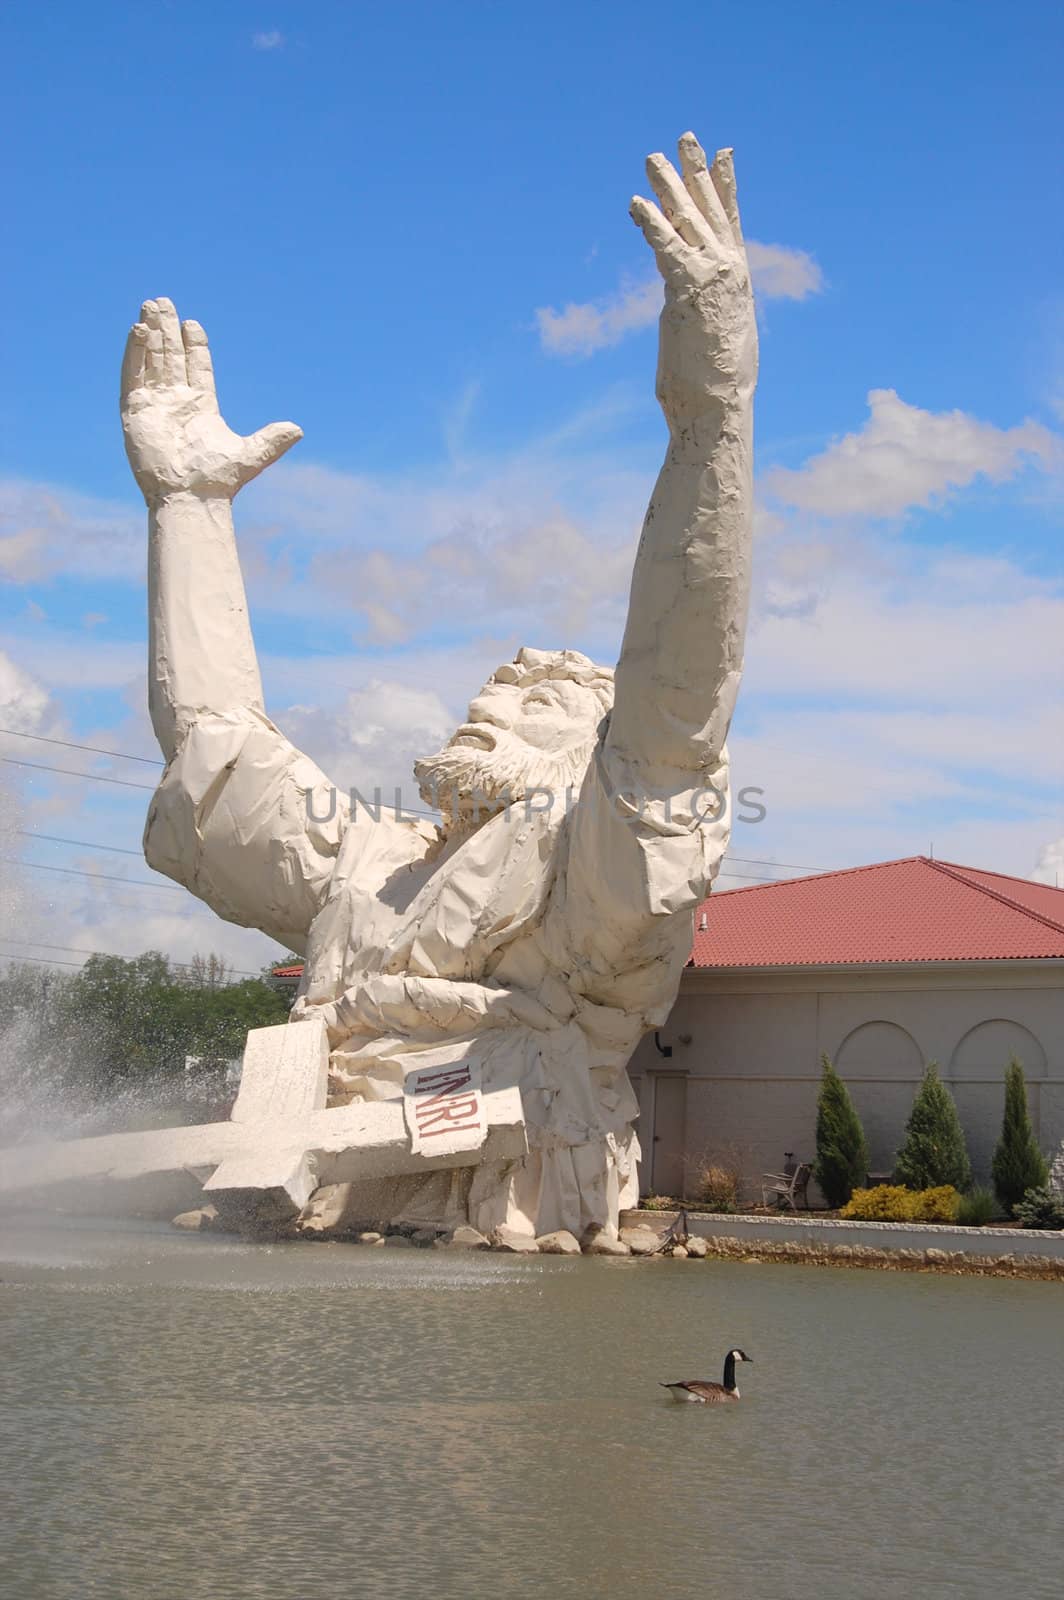 "King of Kings" statue, Monroe, Ohio by tyroneburkemedia@gmail.com